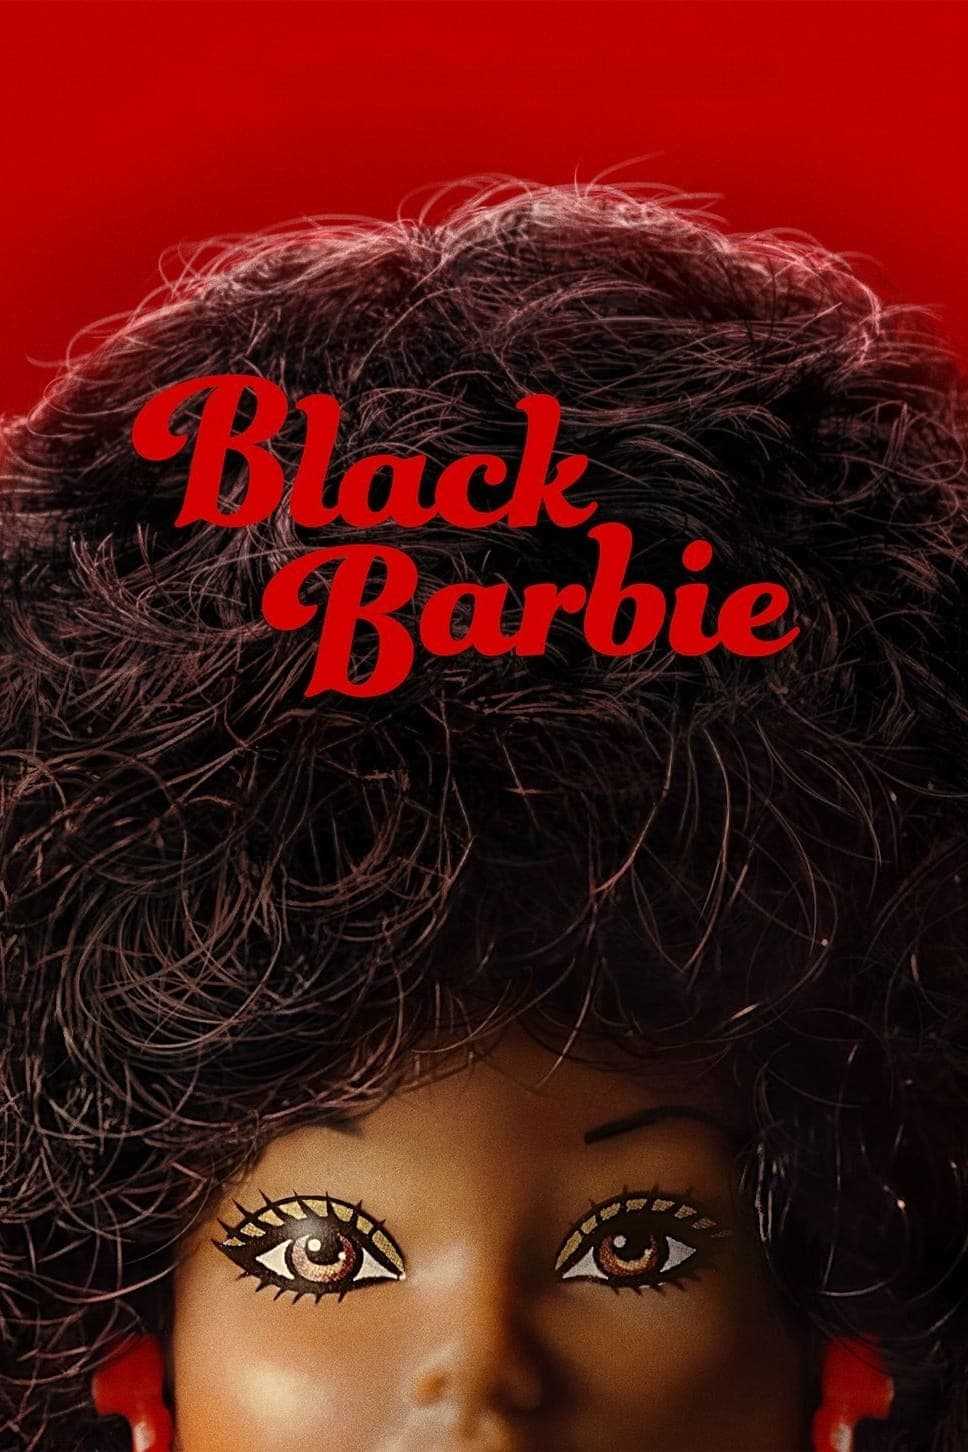 Black Barbie in streaming